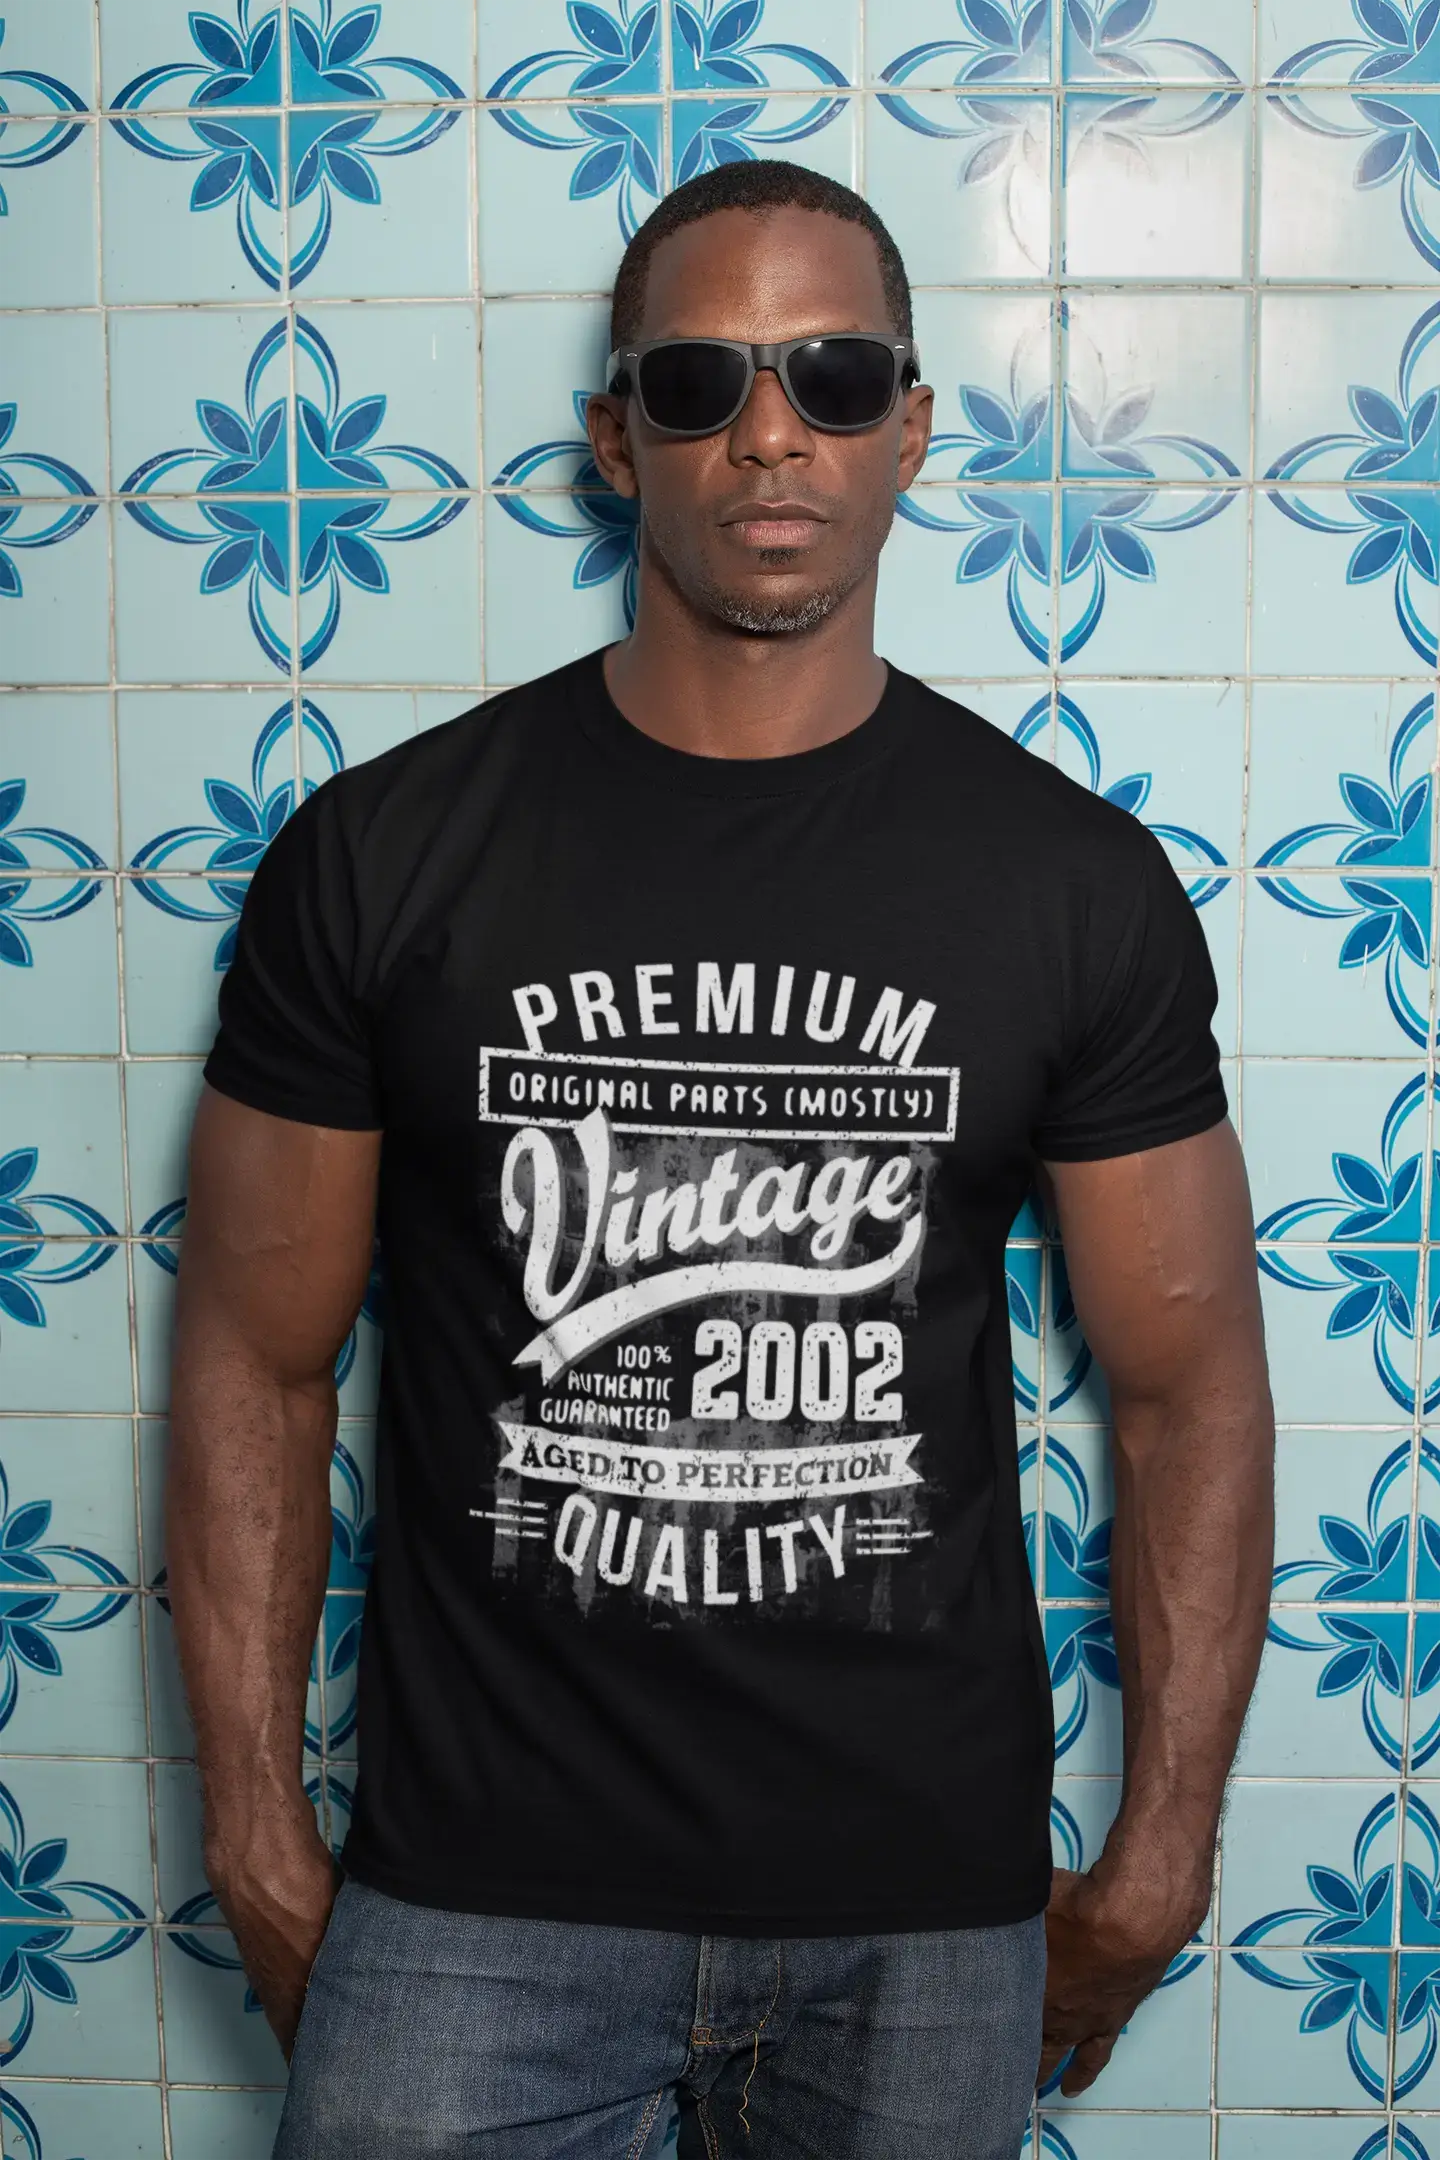 Ultrabasic - Homme T-Shirt Graphique 2002 Aged to Perfection Tee Shirt Cadeau d'anniversaire